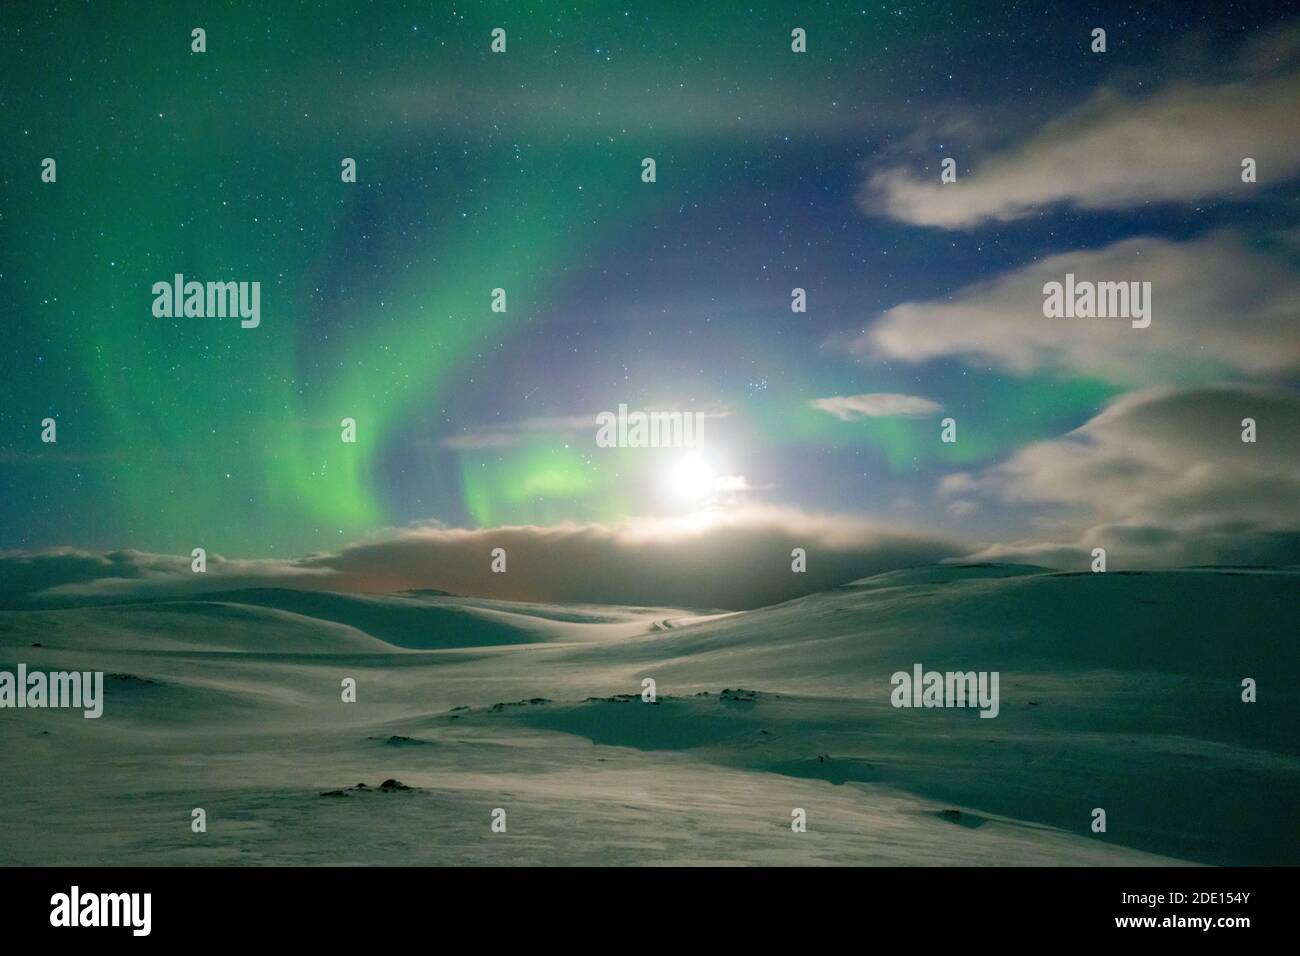 Paesaggio innevato illuminato dalla luna nel cielo stellato durante l'aurora boreale (Aurora Borealis), Skarsvag, Nordkapp, Troms og Finnmark, Norvegia Foto Stock